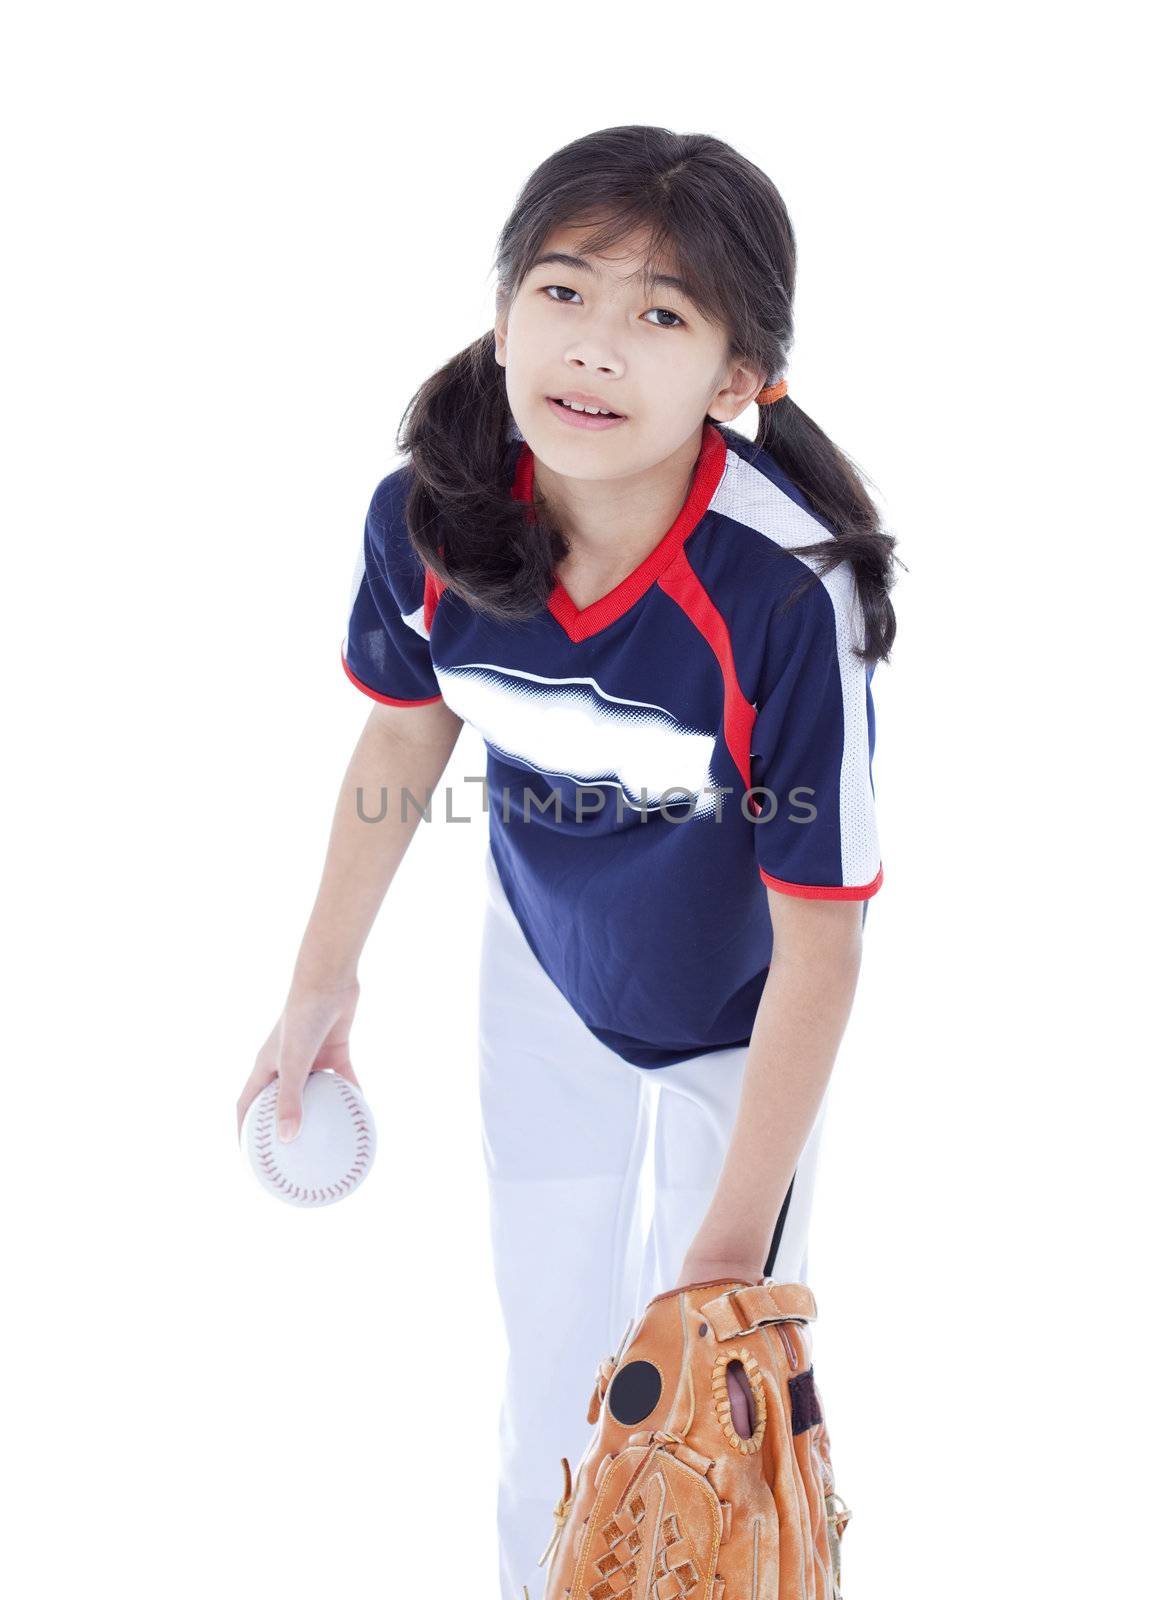 Little biracial asian girl in softball team uniform ready to throw a pitch